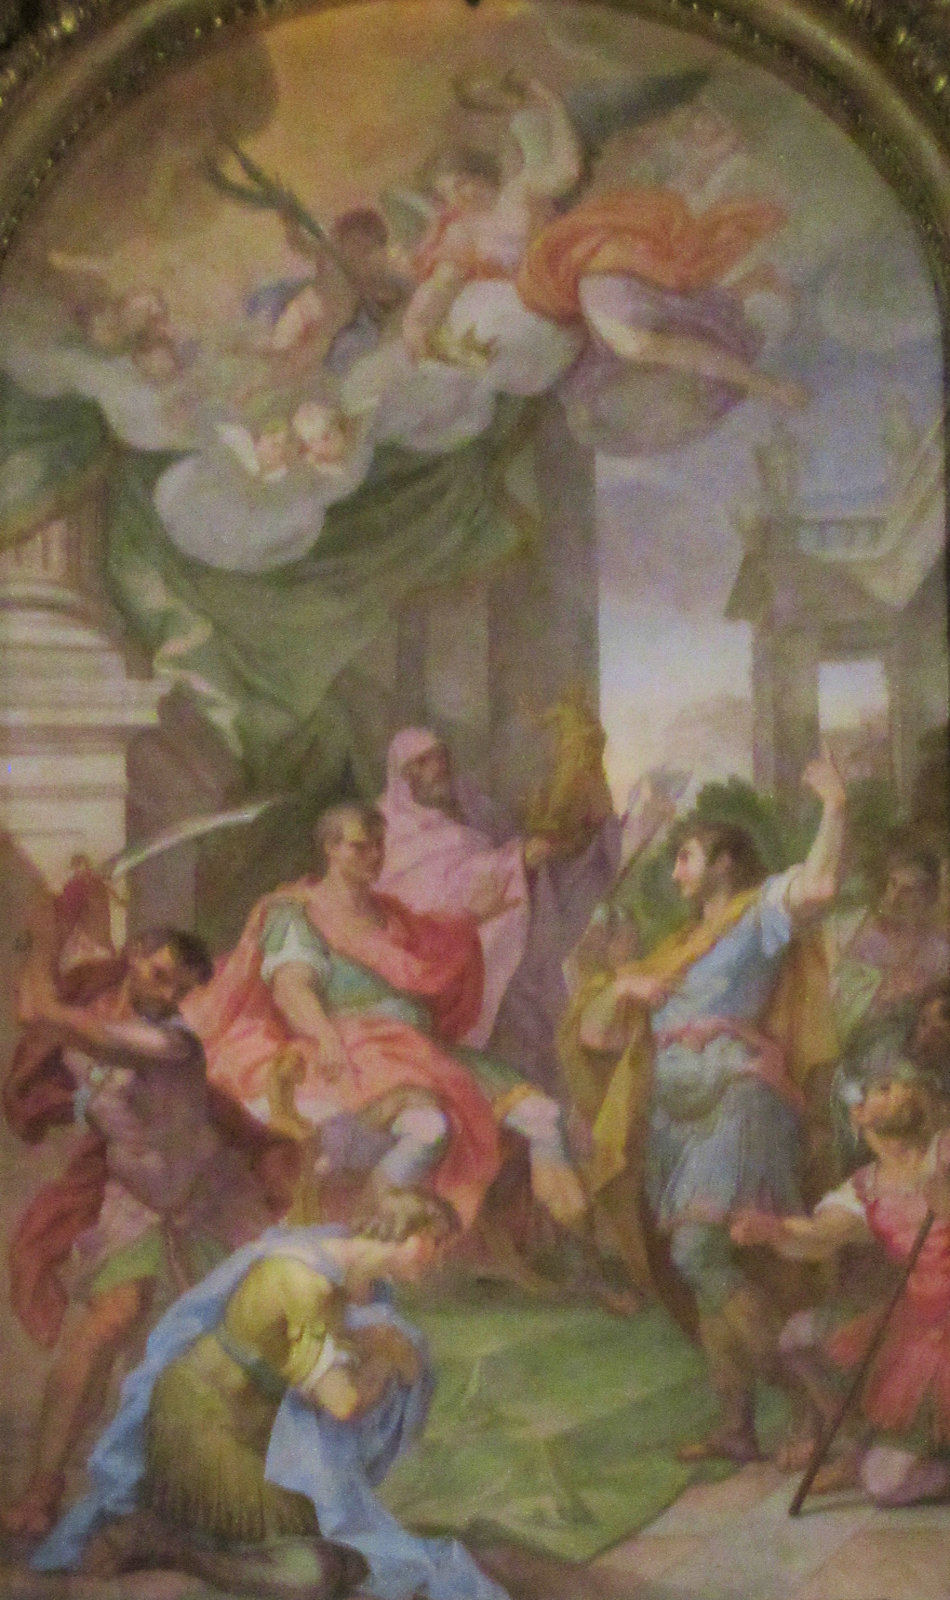 Giacomo Triga: Das Martyrium von Johannes und Paulus, Altarbild, 1726, in der Kirche Santi Giovanni e Paolo in Rom